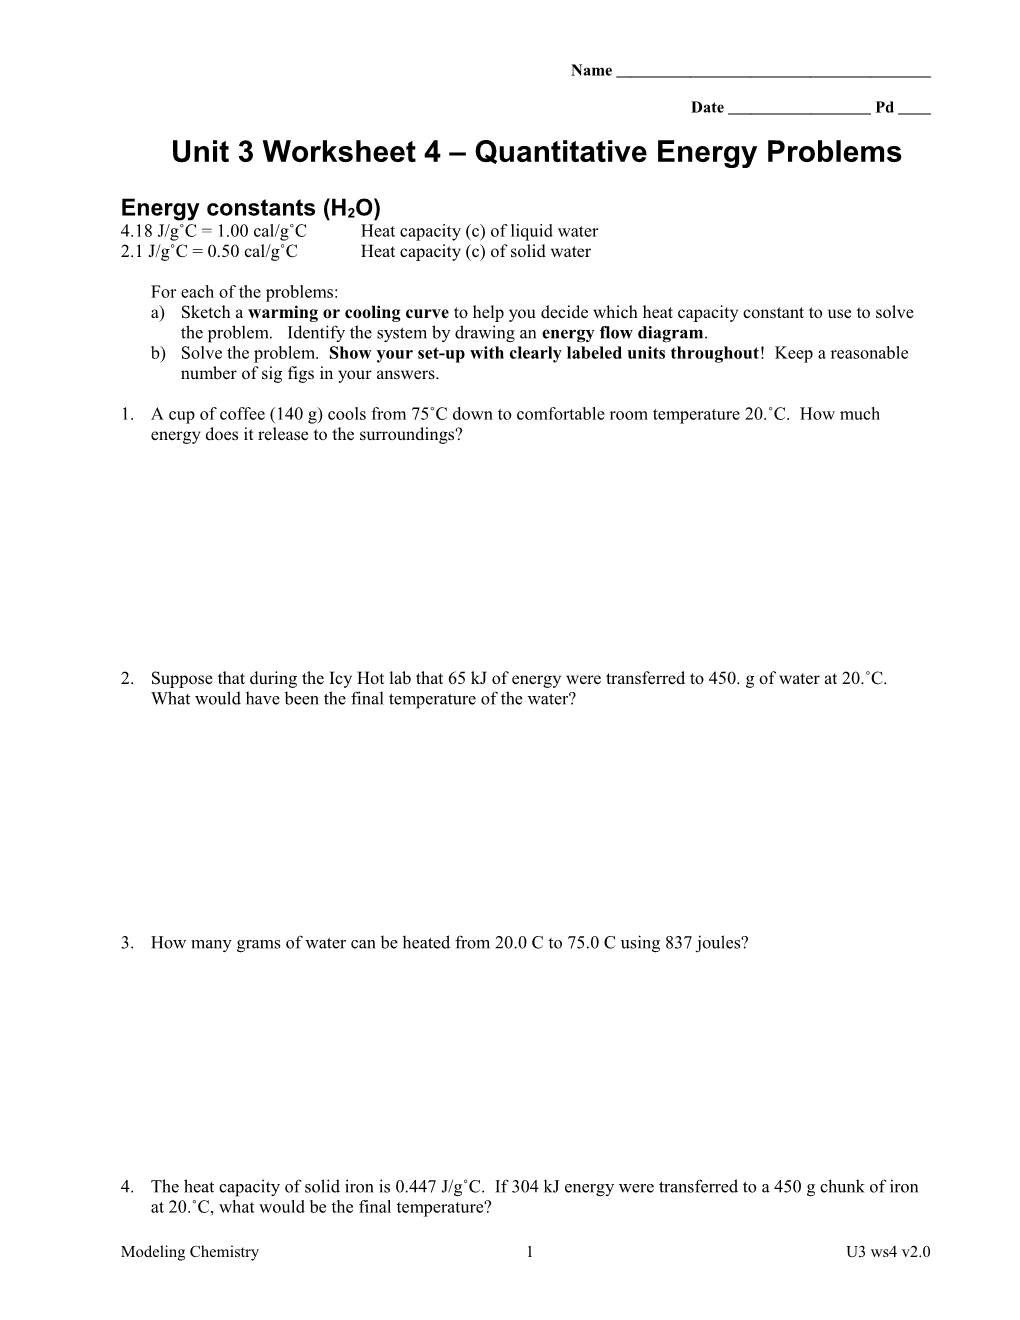 Unit 3 Worksheet 4 Quantitative Energy Problems